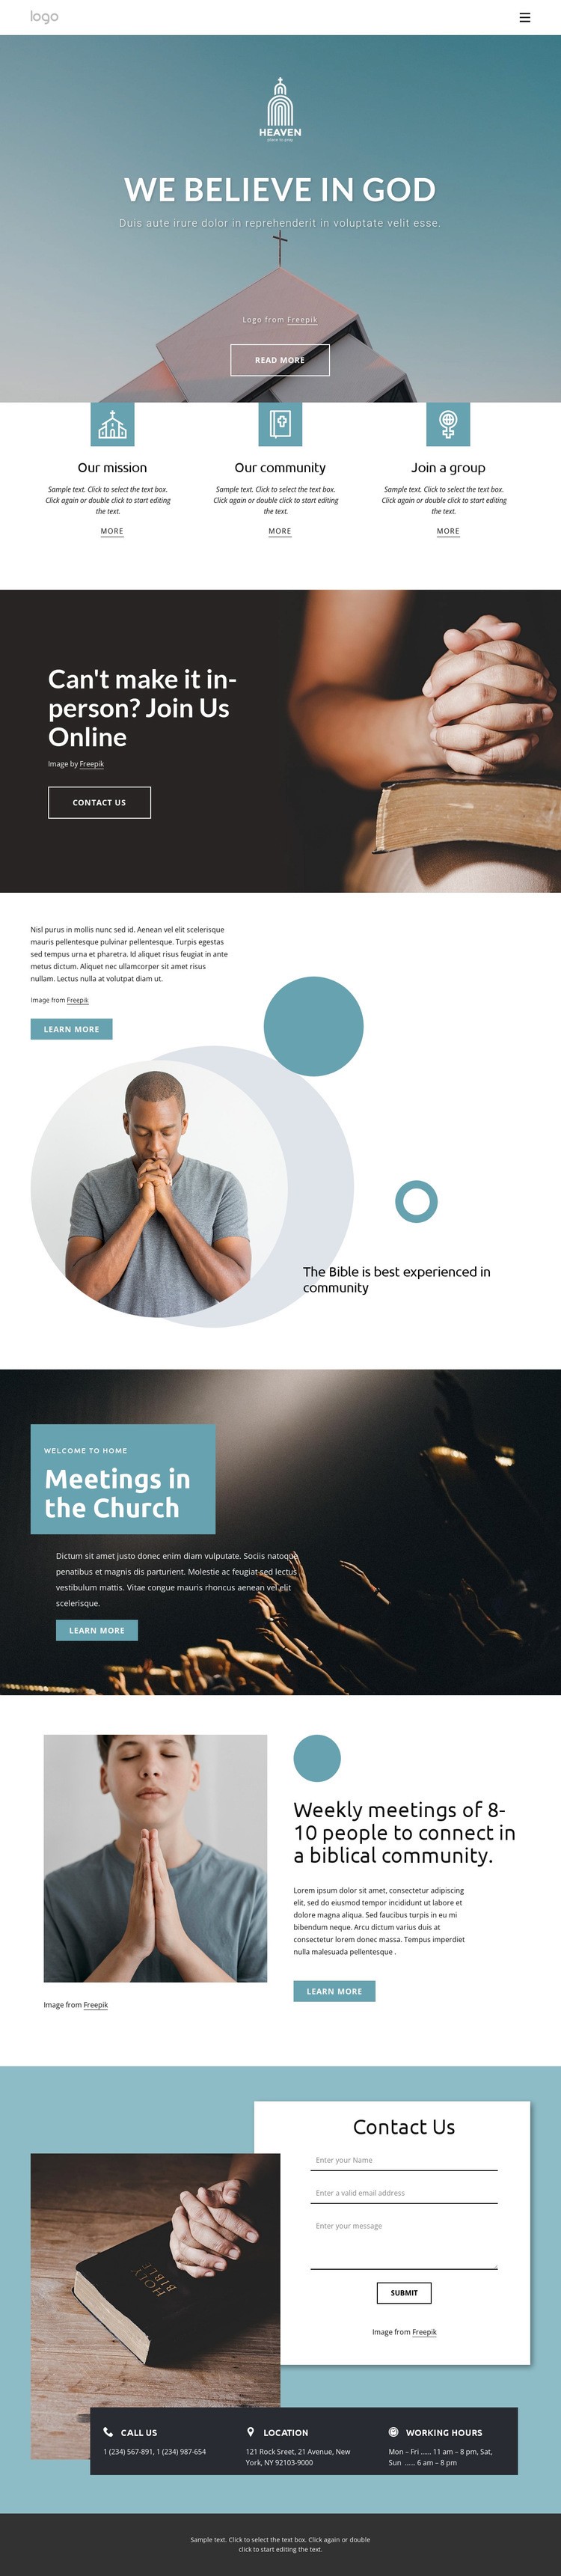 Family friendly church Web Page Design